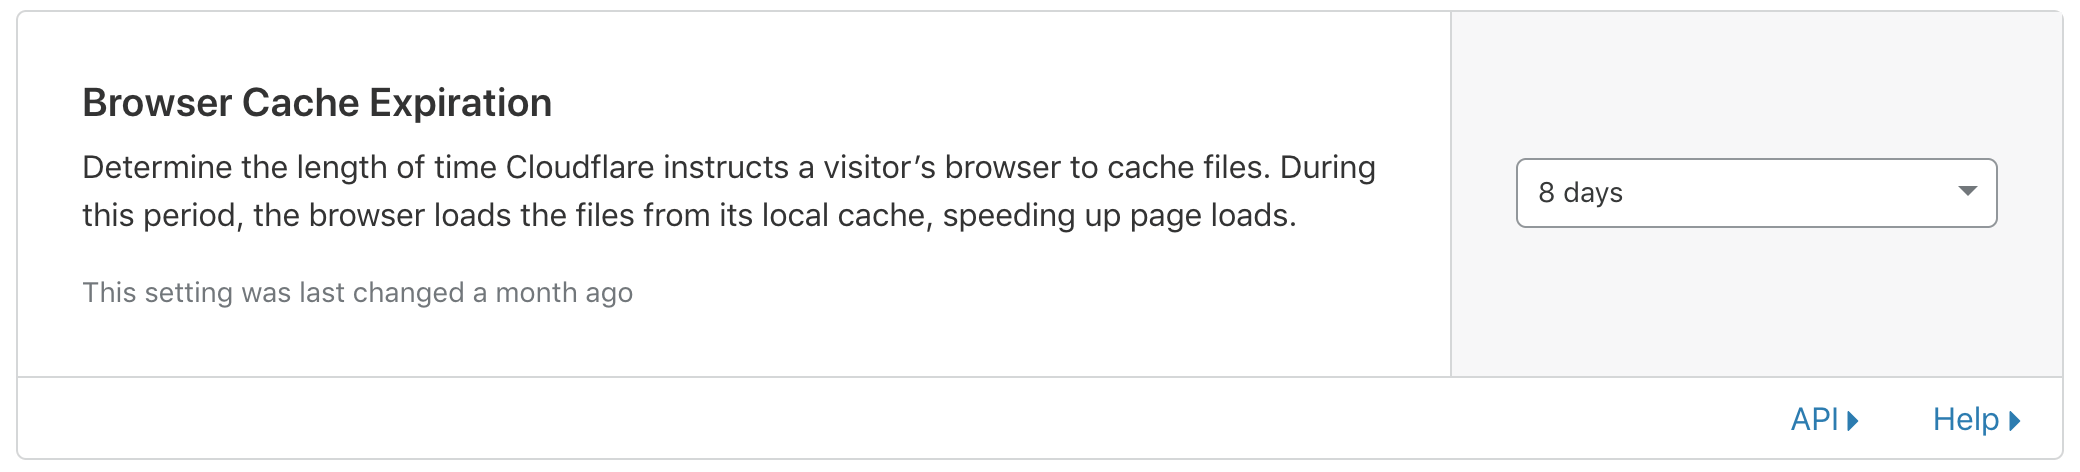 browser-cache-expiration